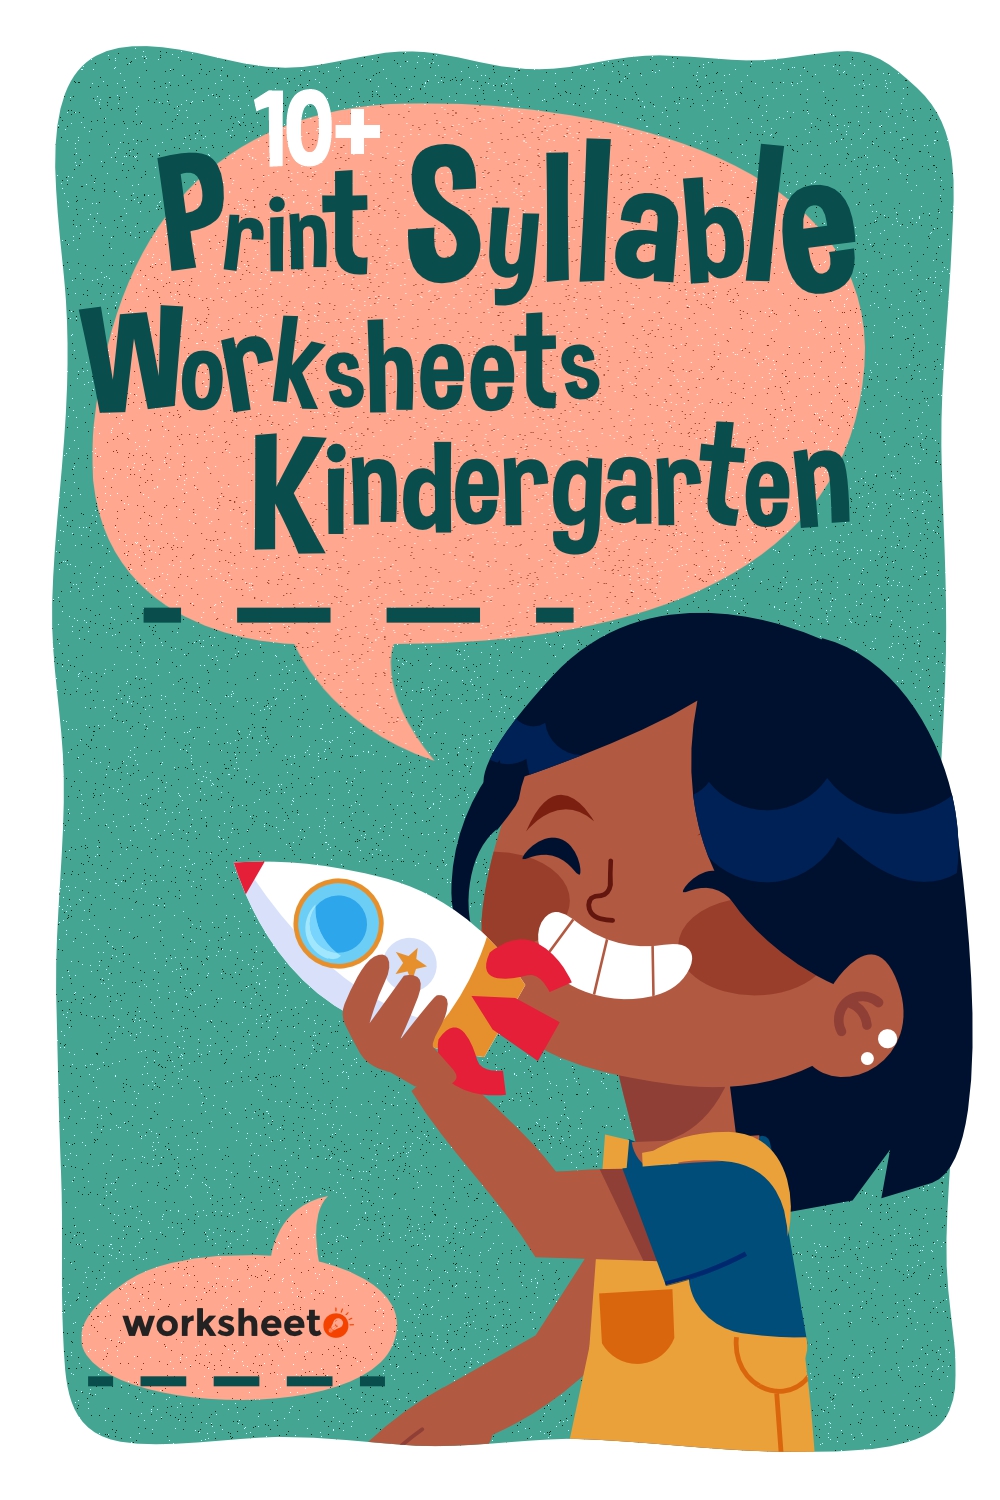 Print Syllable Worksheets Kindergarten